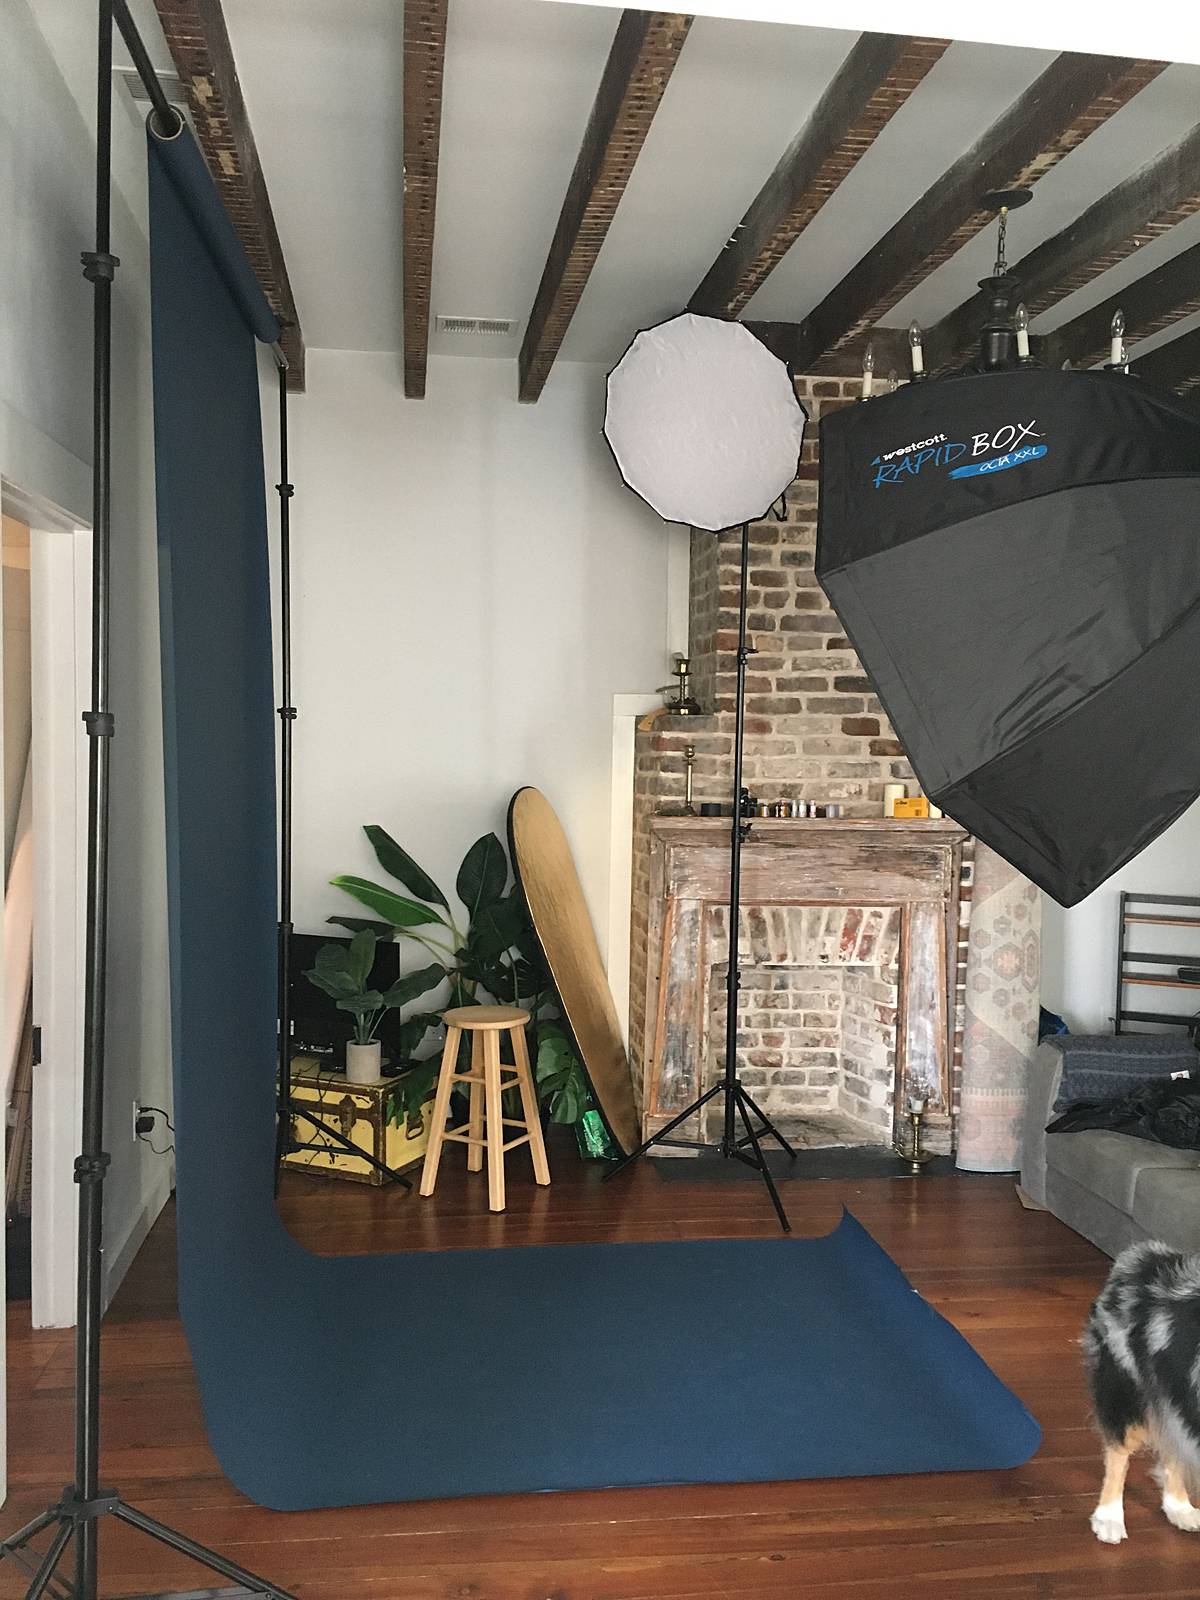 studio strobe lighting positions and diagram for shooting studio portraits on film against savage ultramarine seamless paper